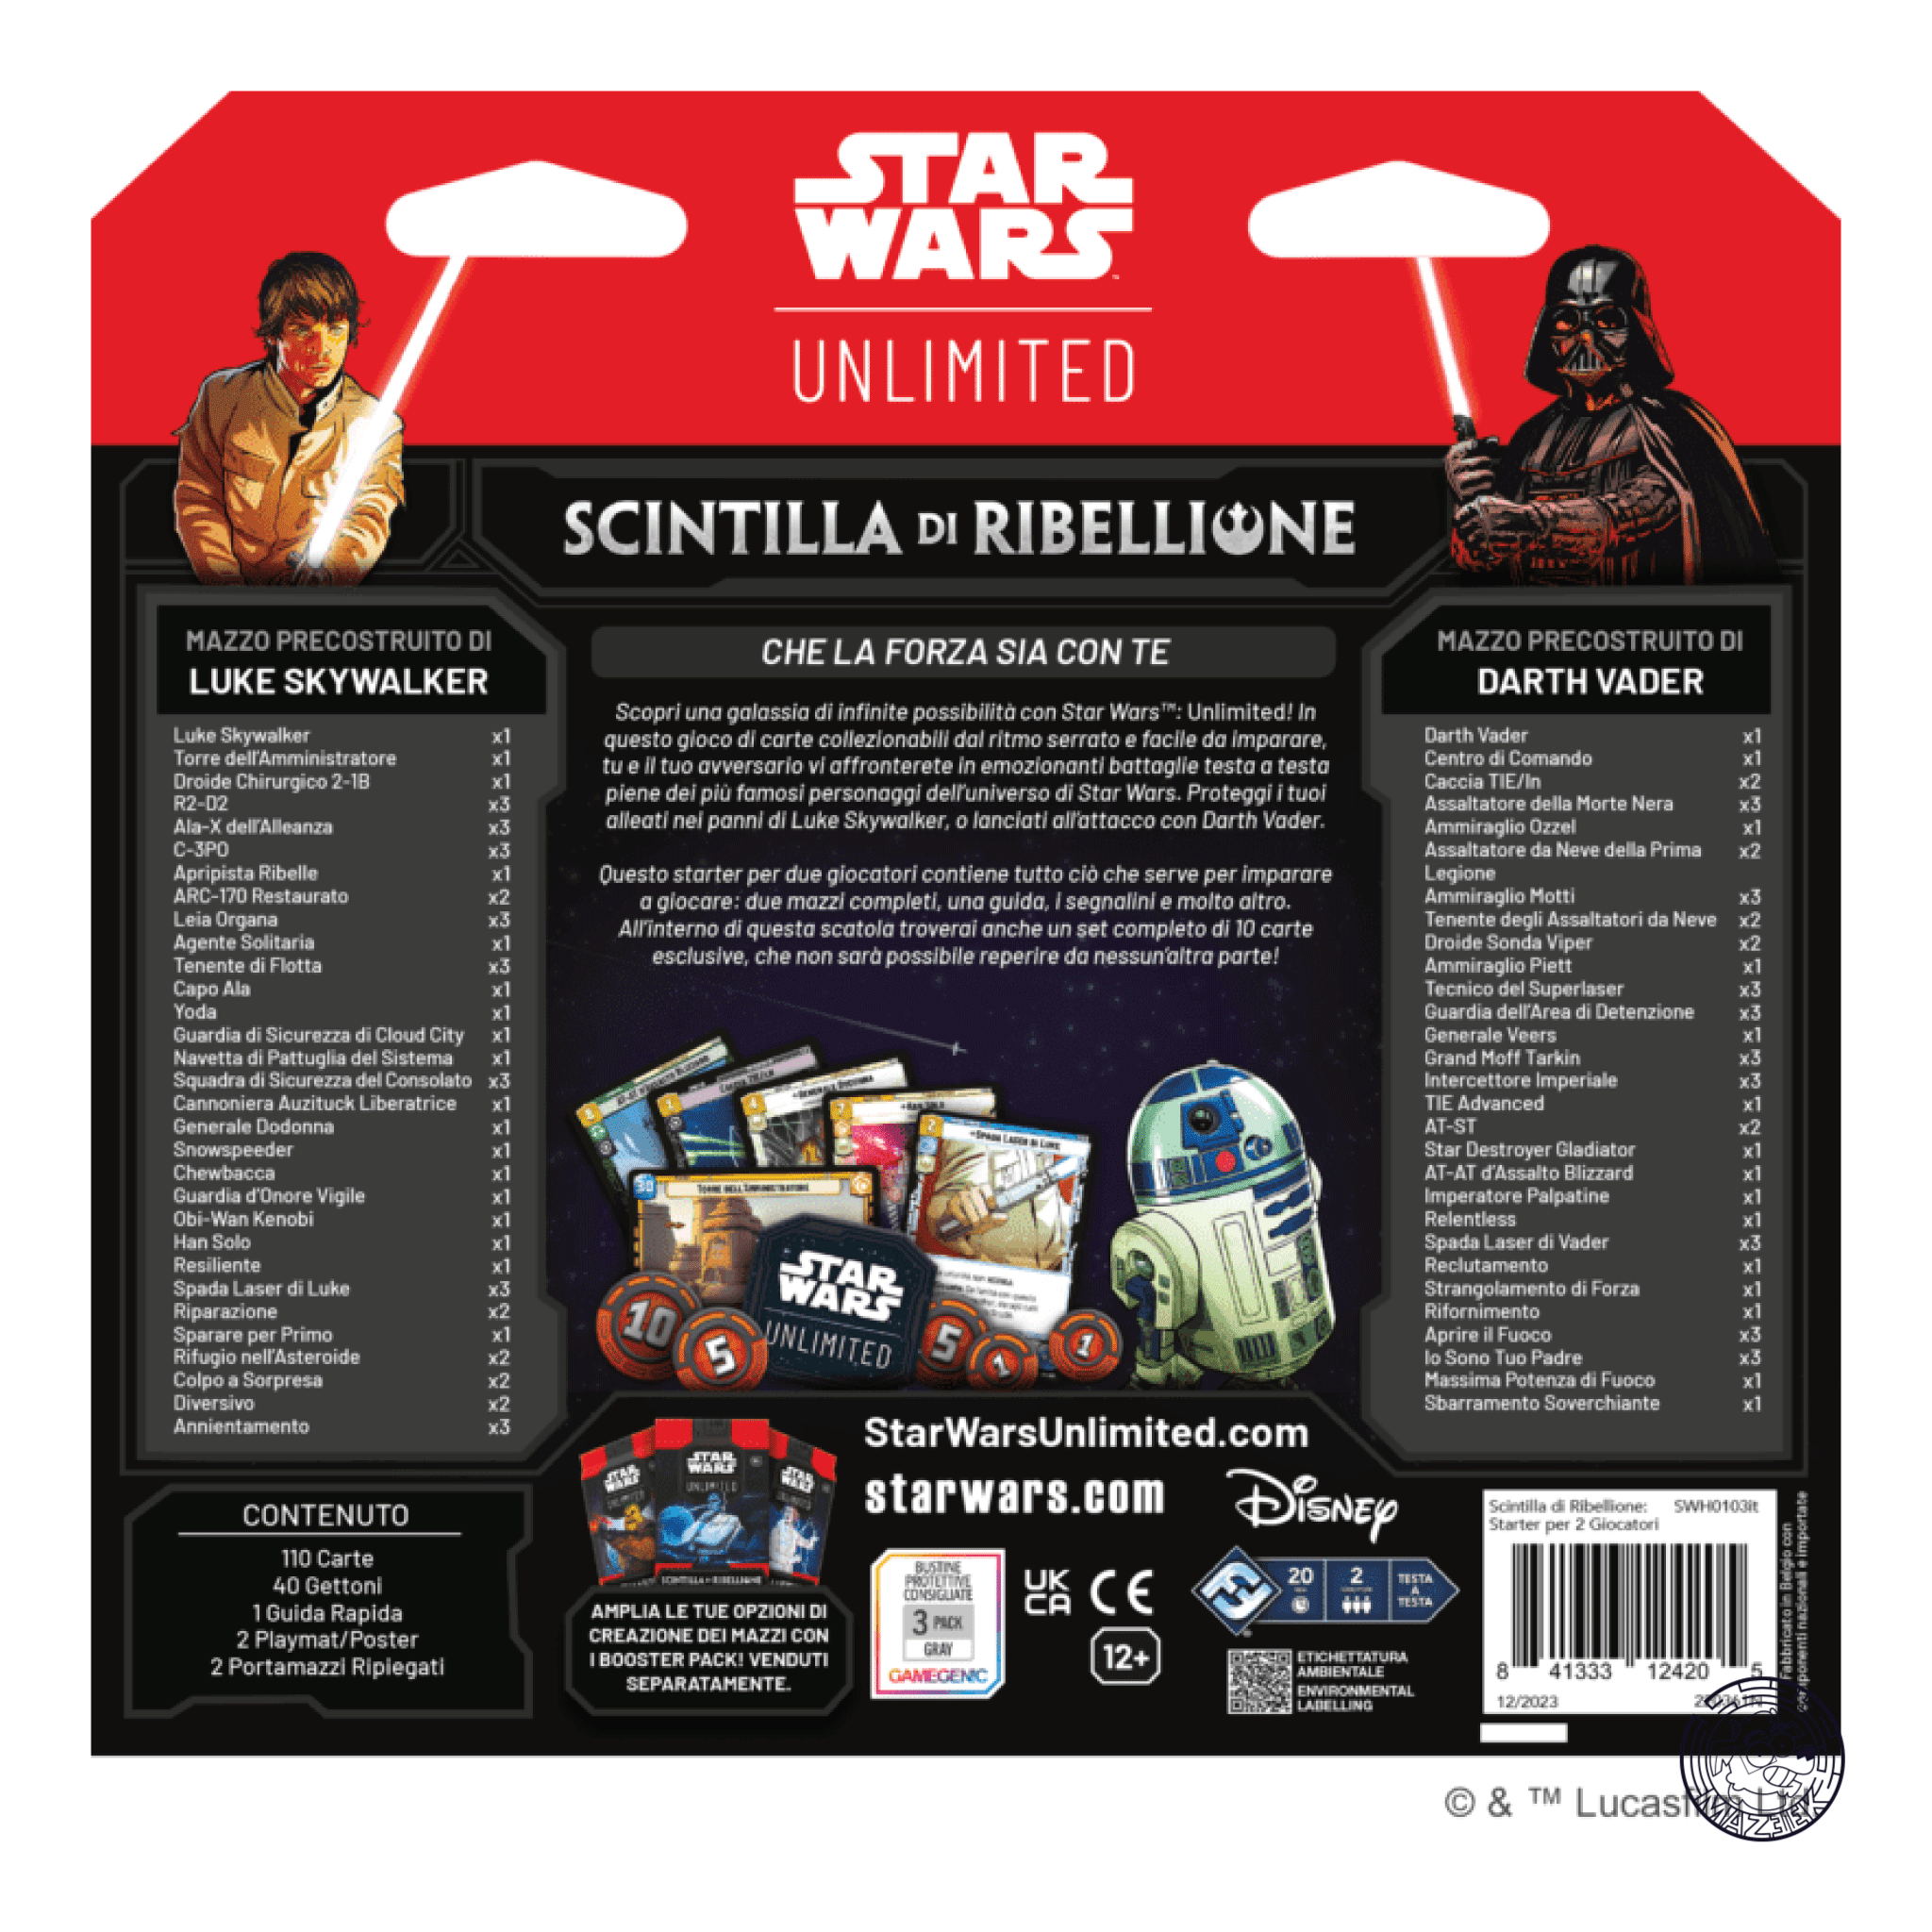 Star Wars Unlimited! Scintilla di Ribellione - Starter per 2 giocatori: Luke Skywalker / Darth Vader